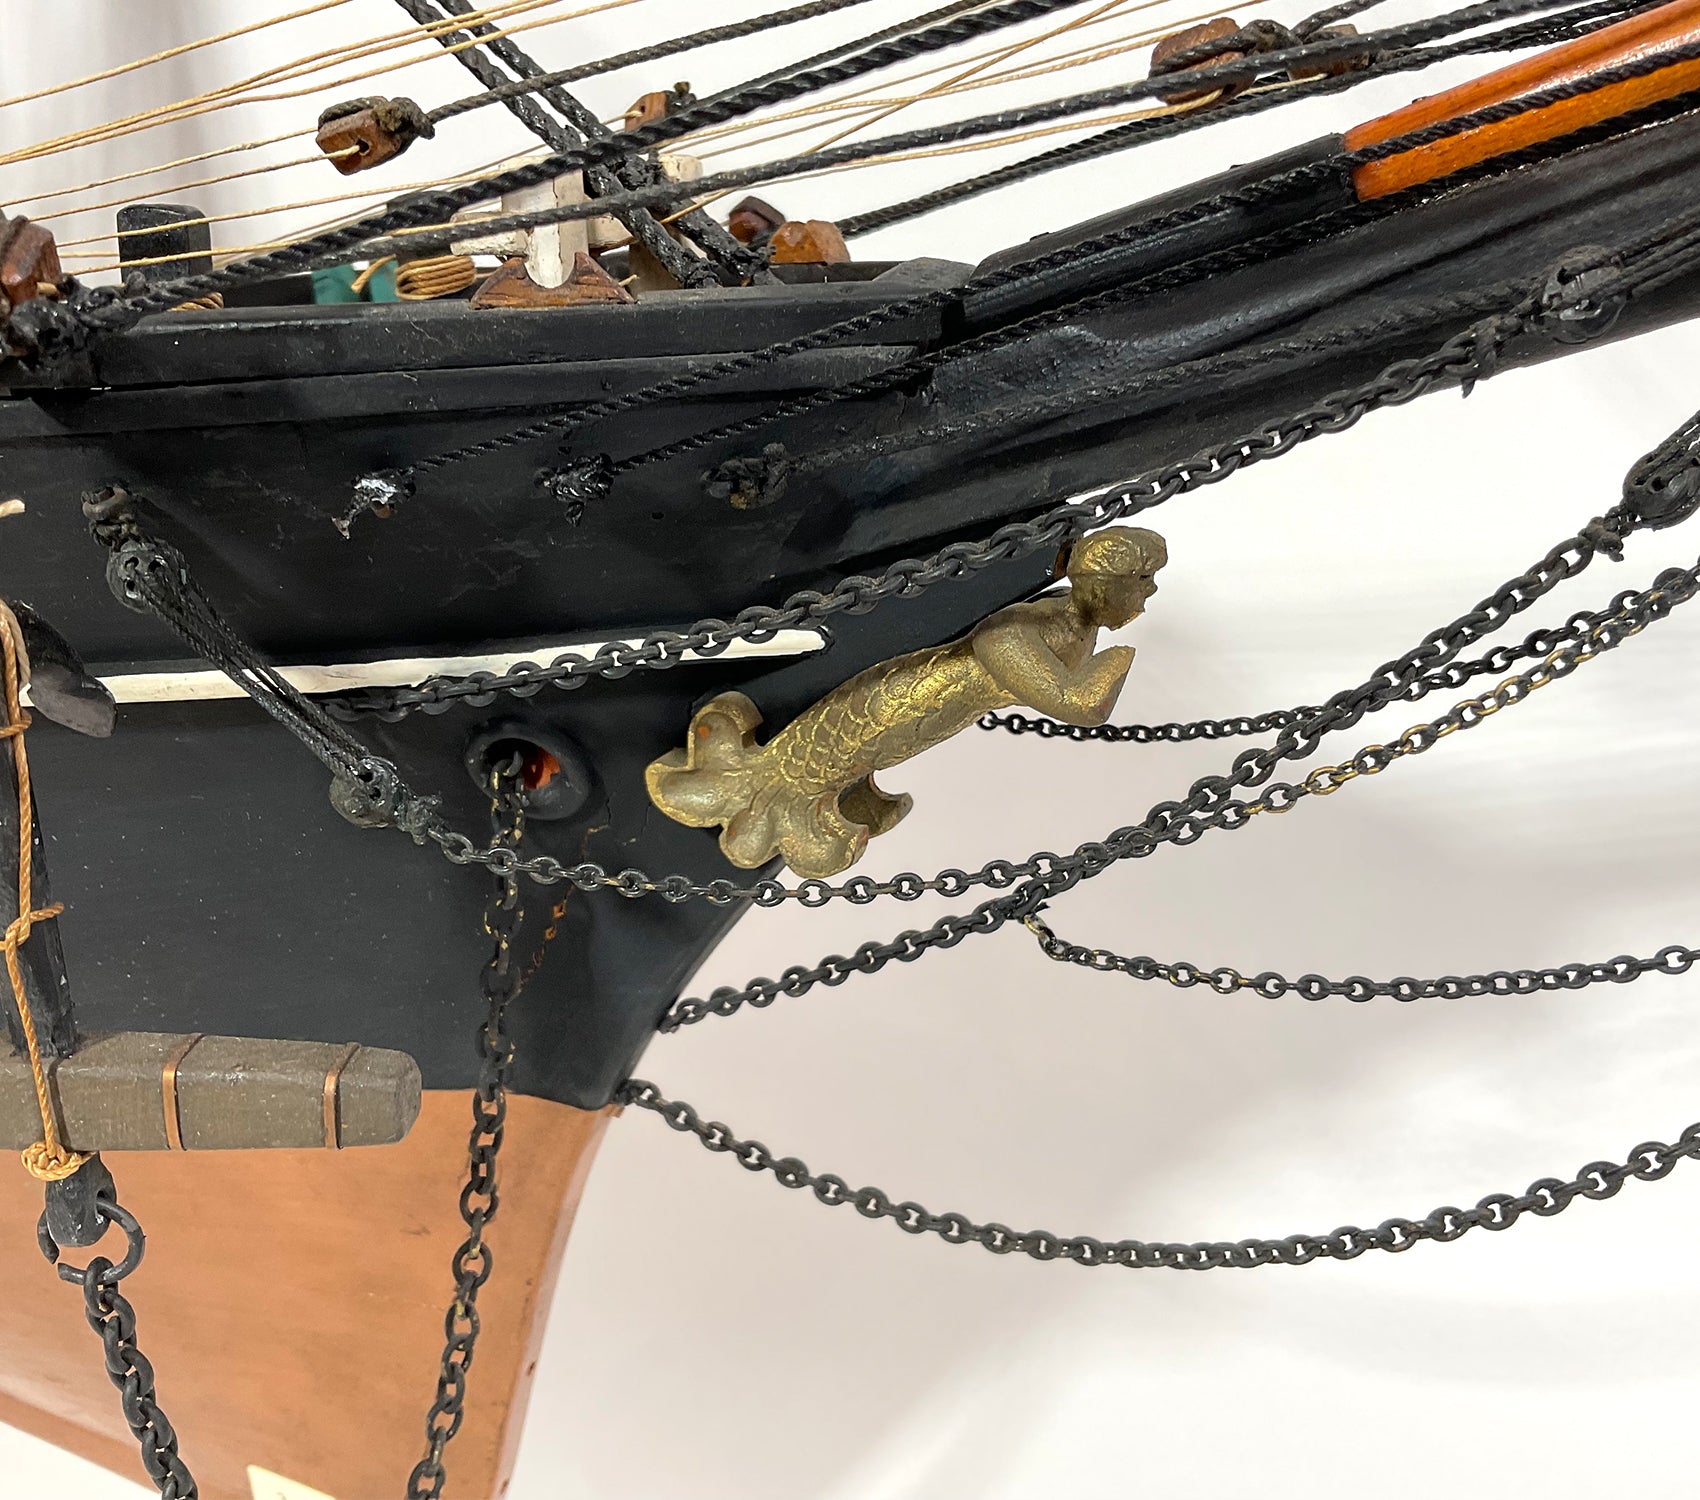 Antique Ships Model "Sovereign Of The Seas" - Lannan Gallery